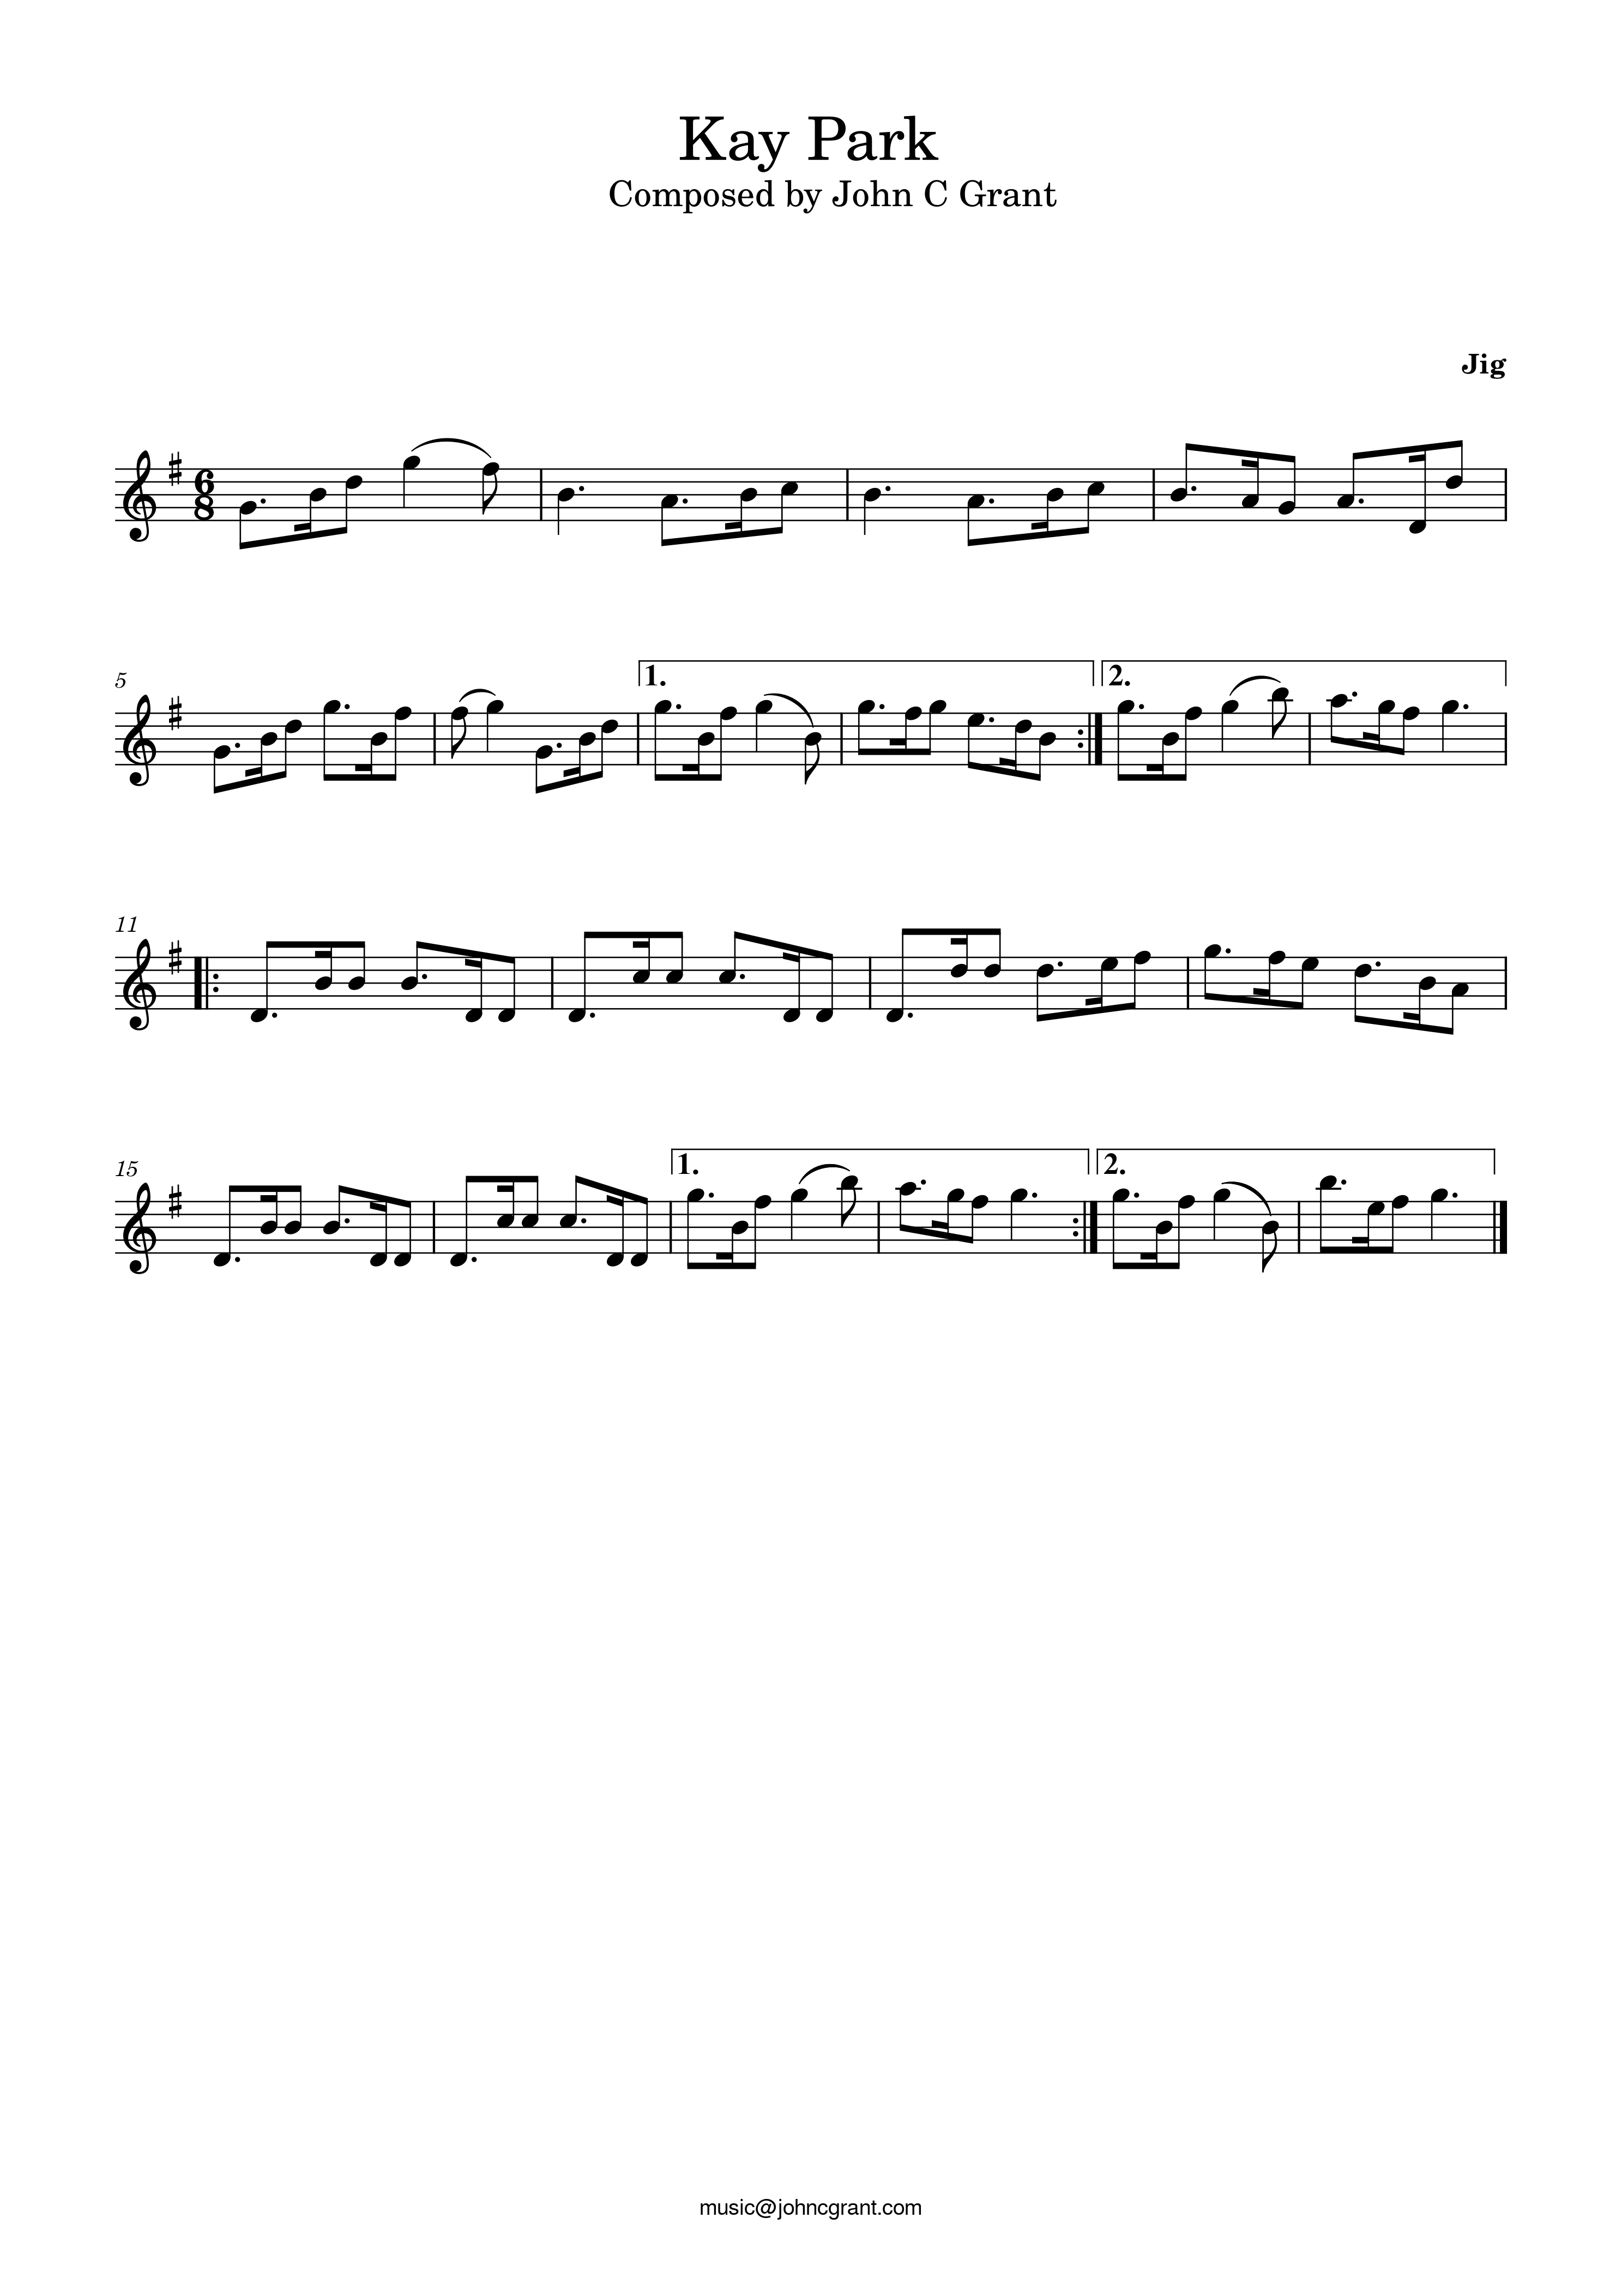 Kay Park - Composed by John C Grant (https://johncgrant.com). Traditional composer from Kilmarnock, Ayrshire, Scotland.